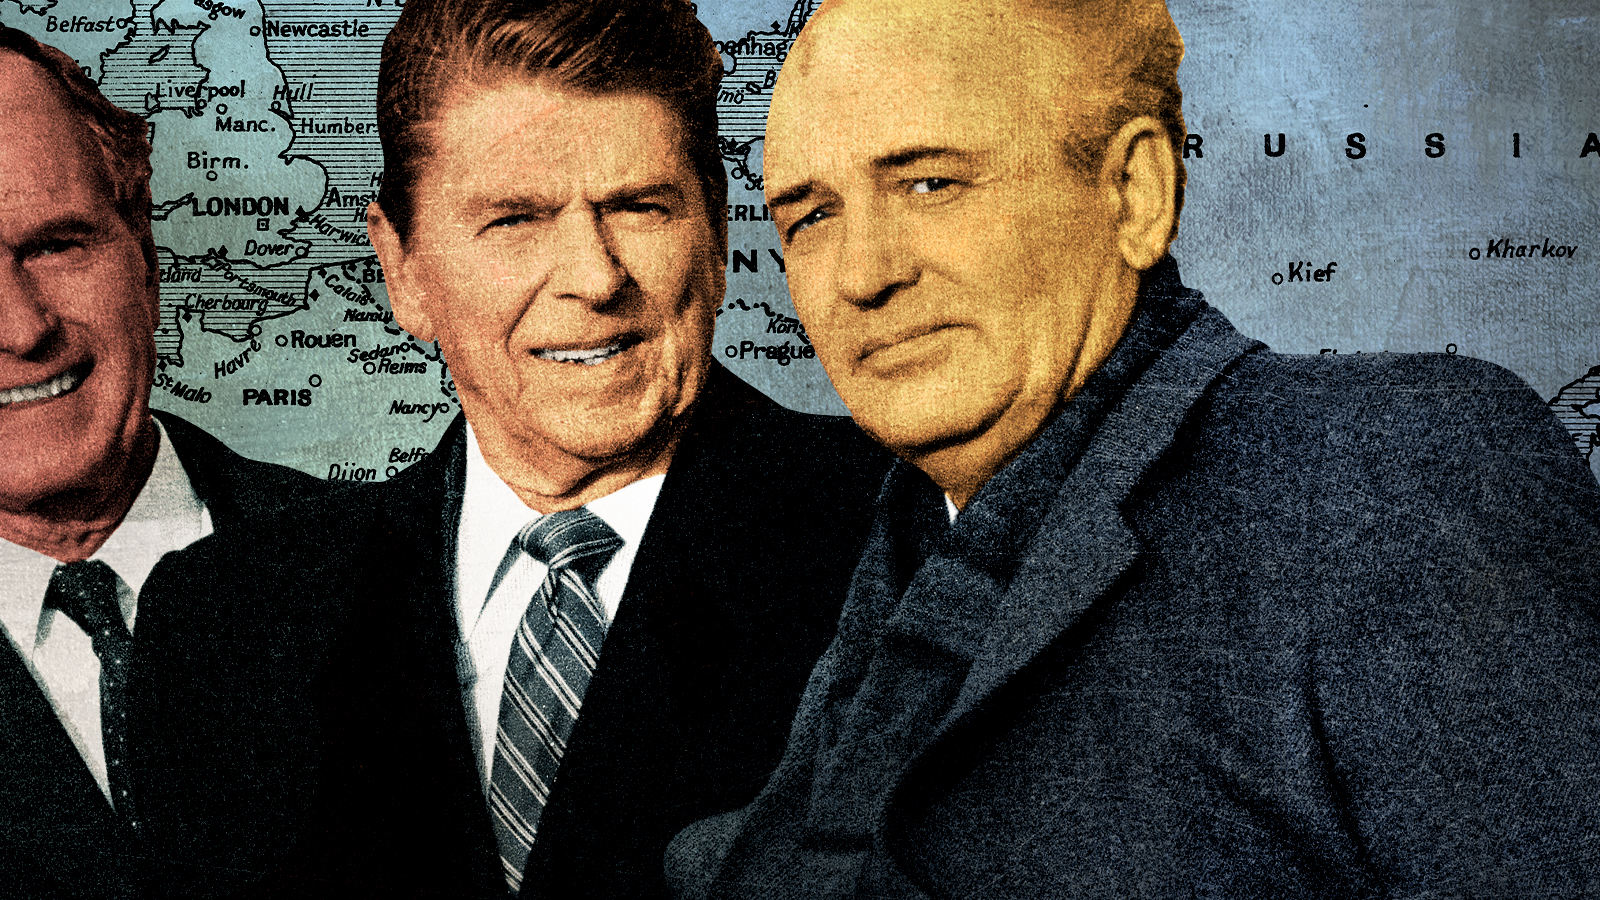 Bush, Reagan, and Gorbachev.